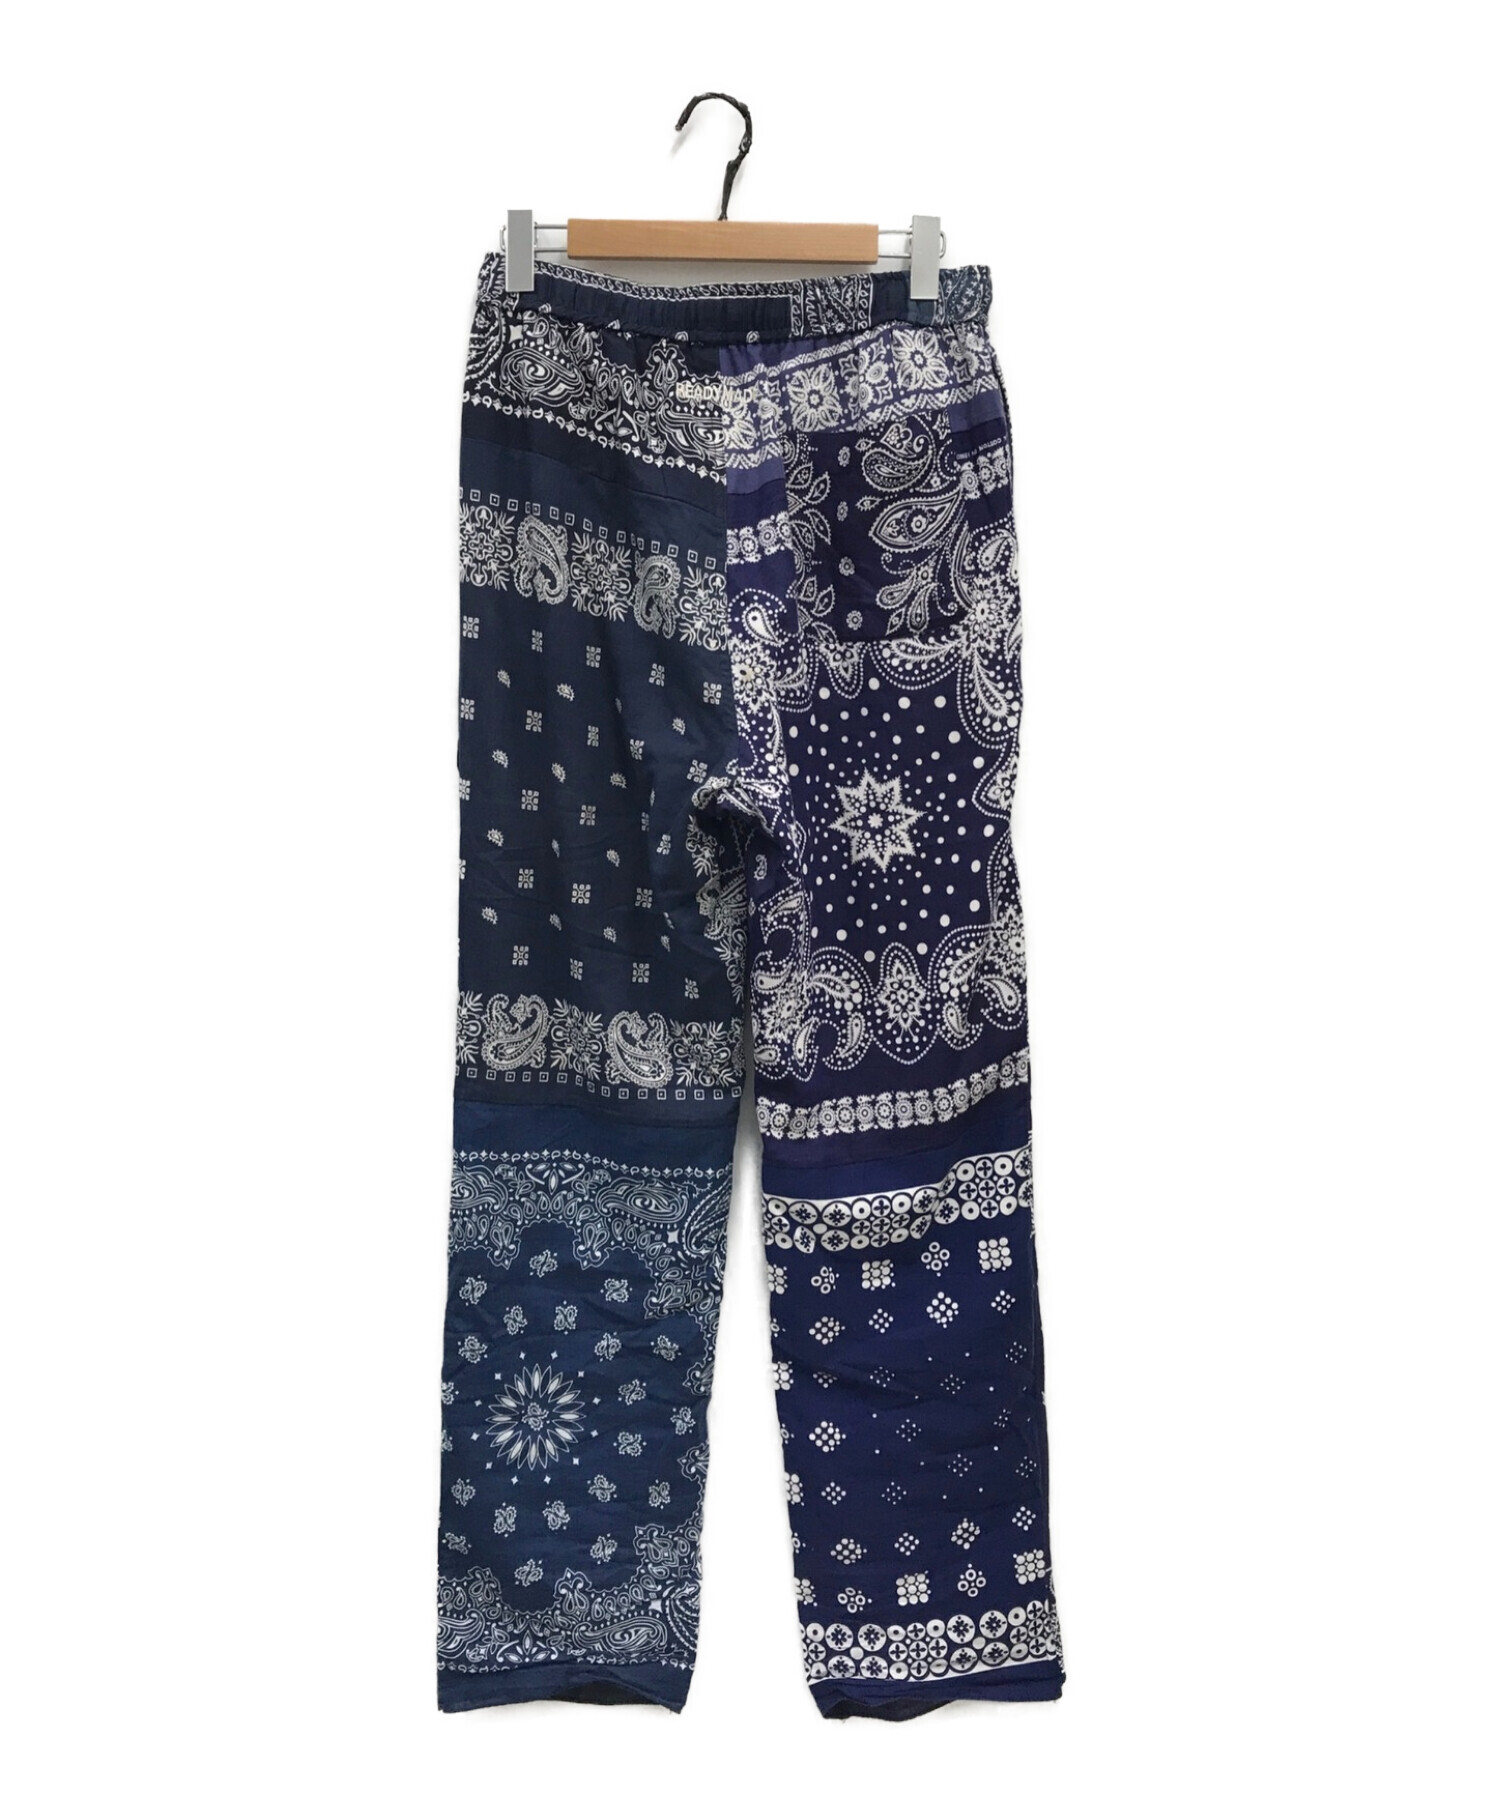 Sova Men's 3-Pack Ultra Comfy Fit Micro Fleece Pajama Pants (3 pcs